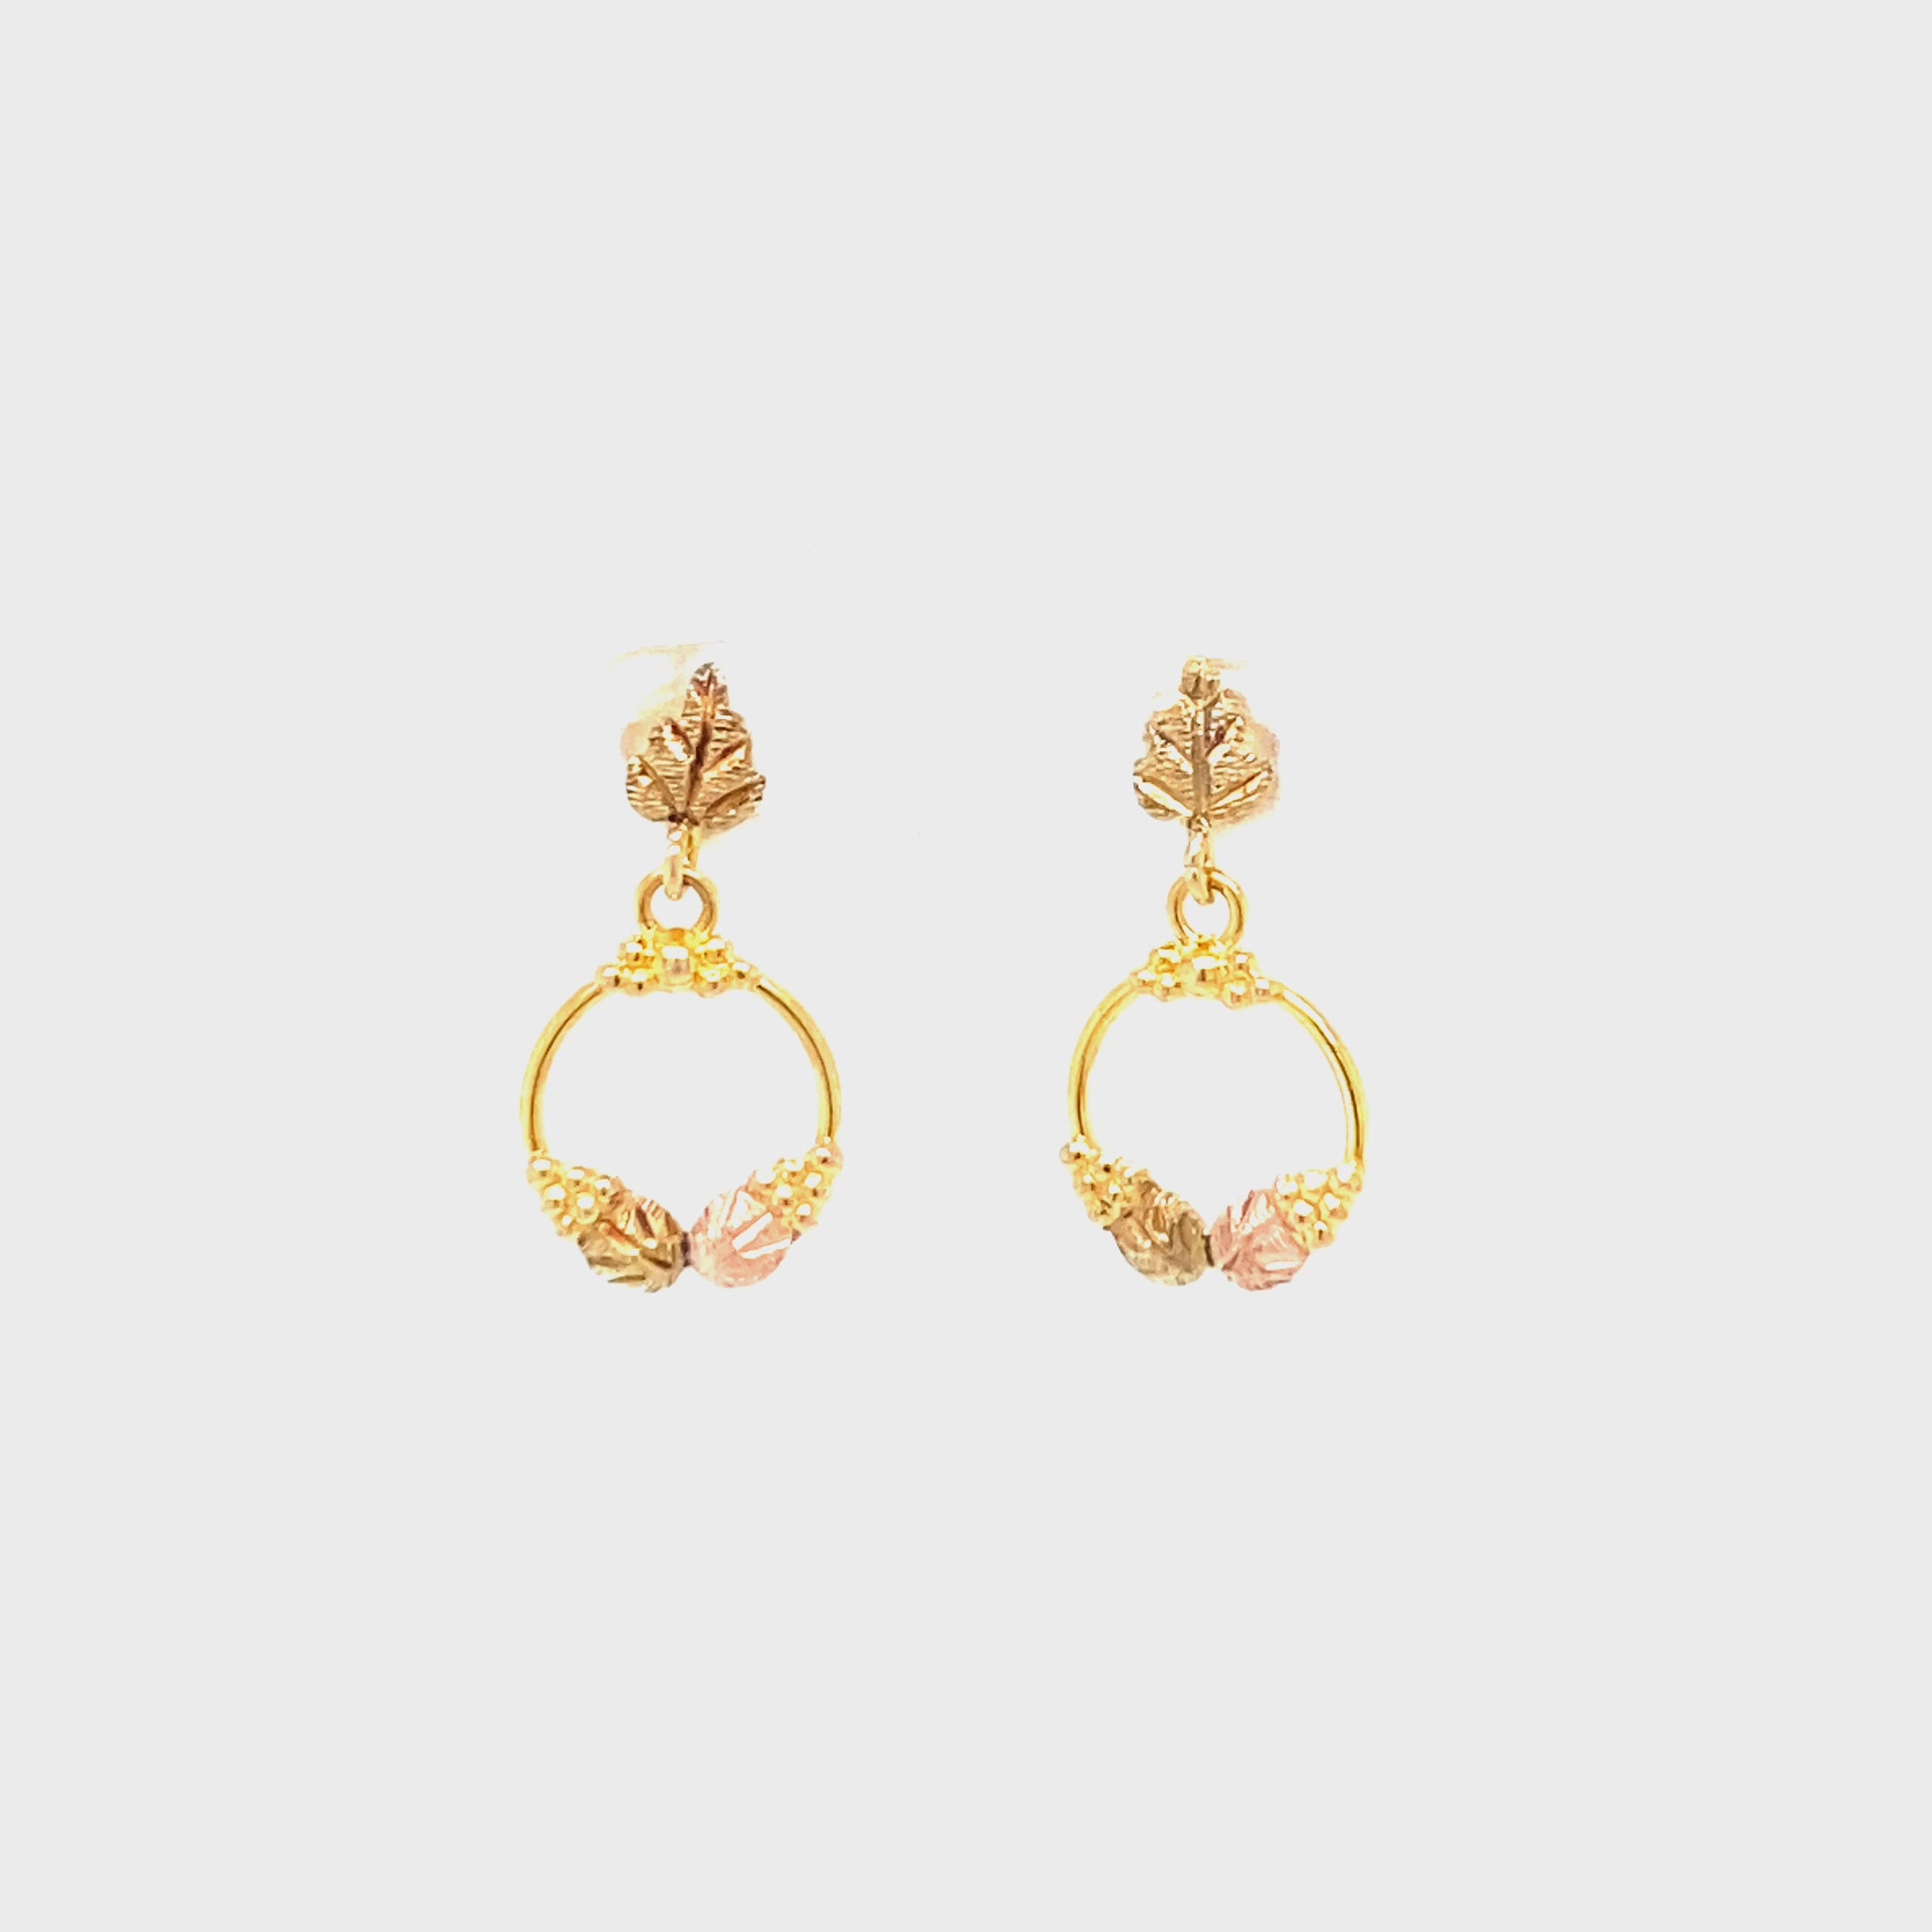 Black Hills Gold Earrings 10K Solid Gold Grape Leaf Earrings Tri-Color Gold Earrings South Dakota Dangle Drop Earrings Vintage American USA